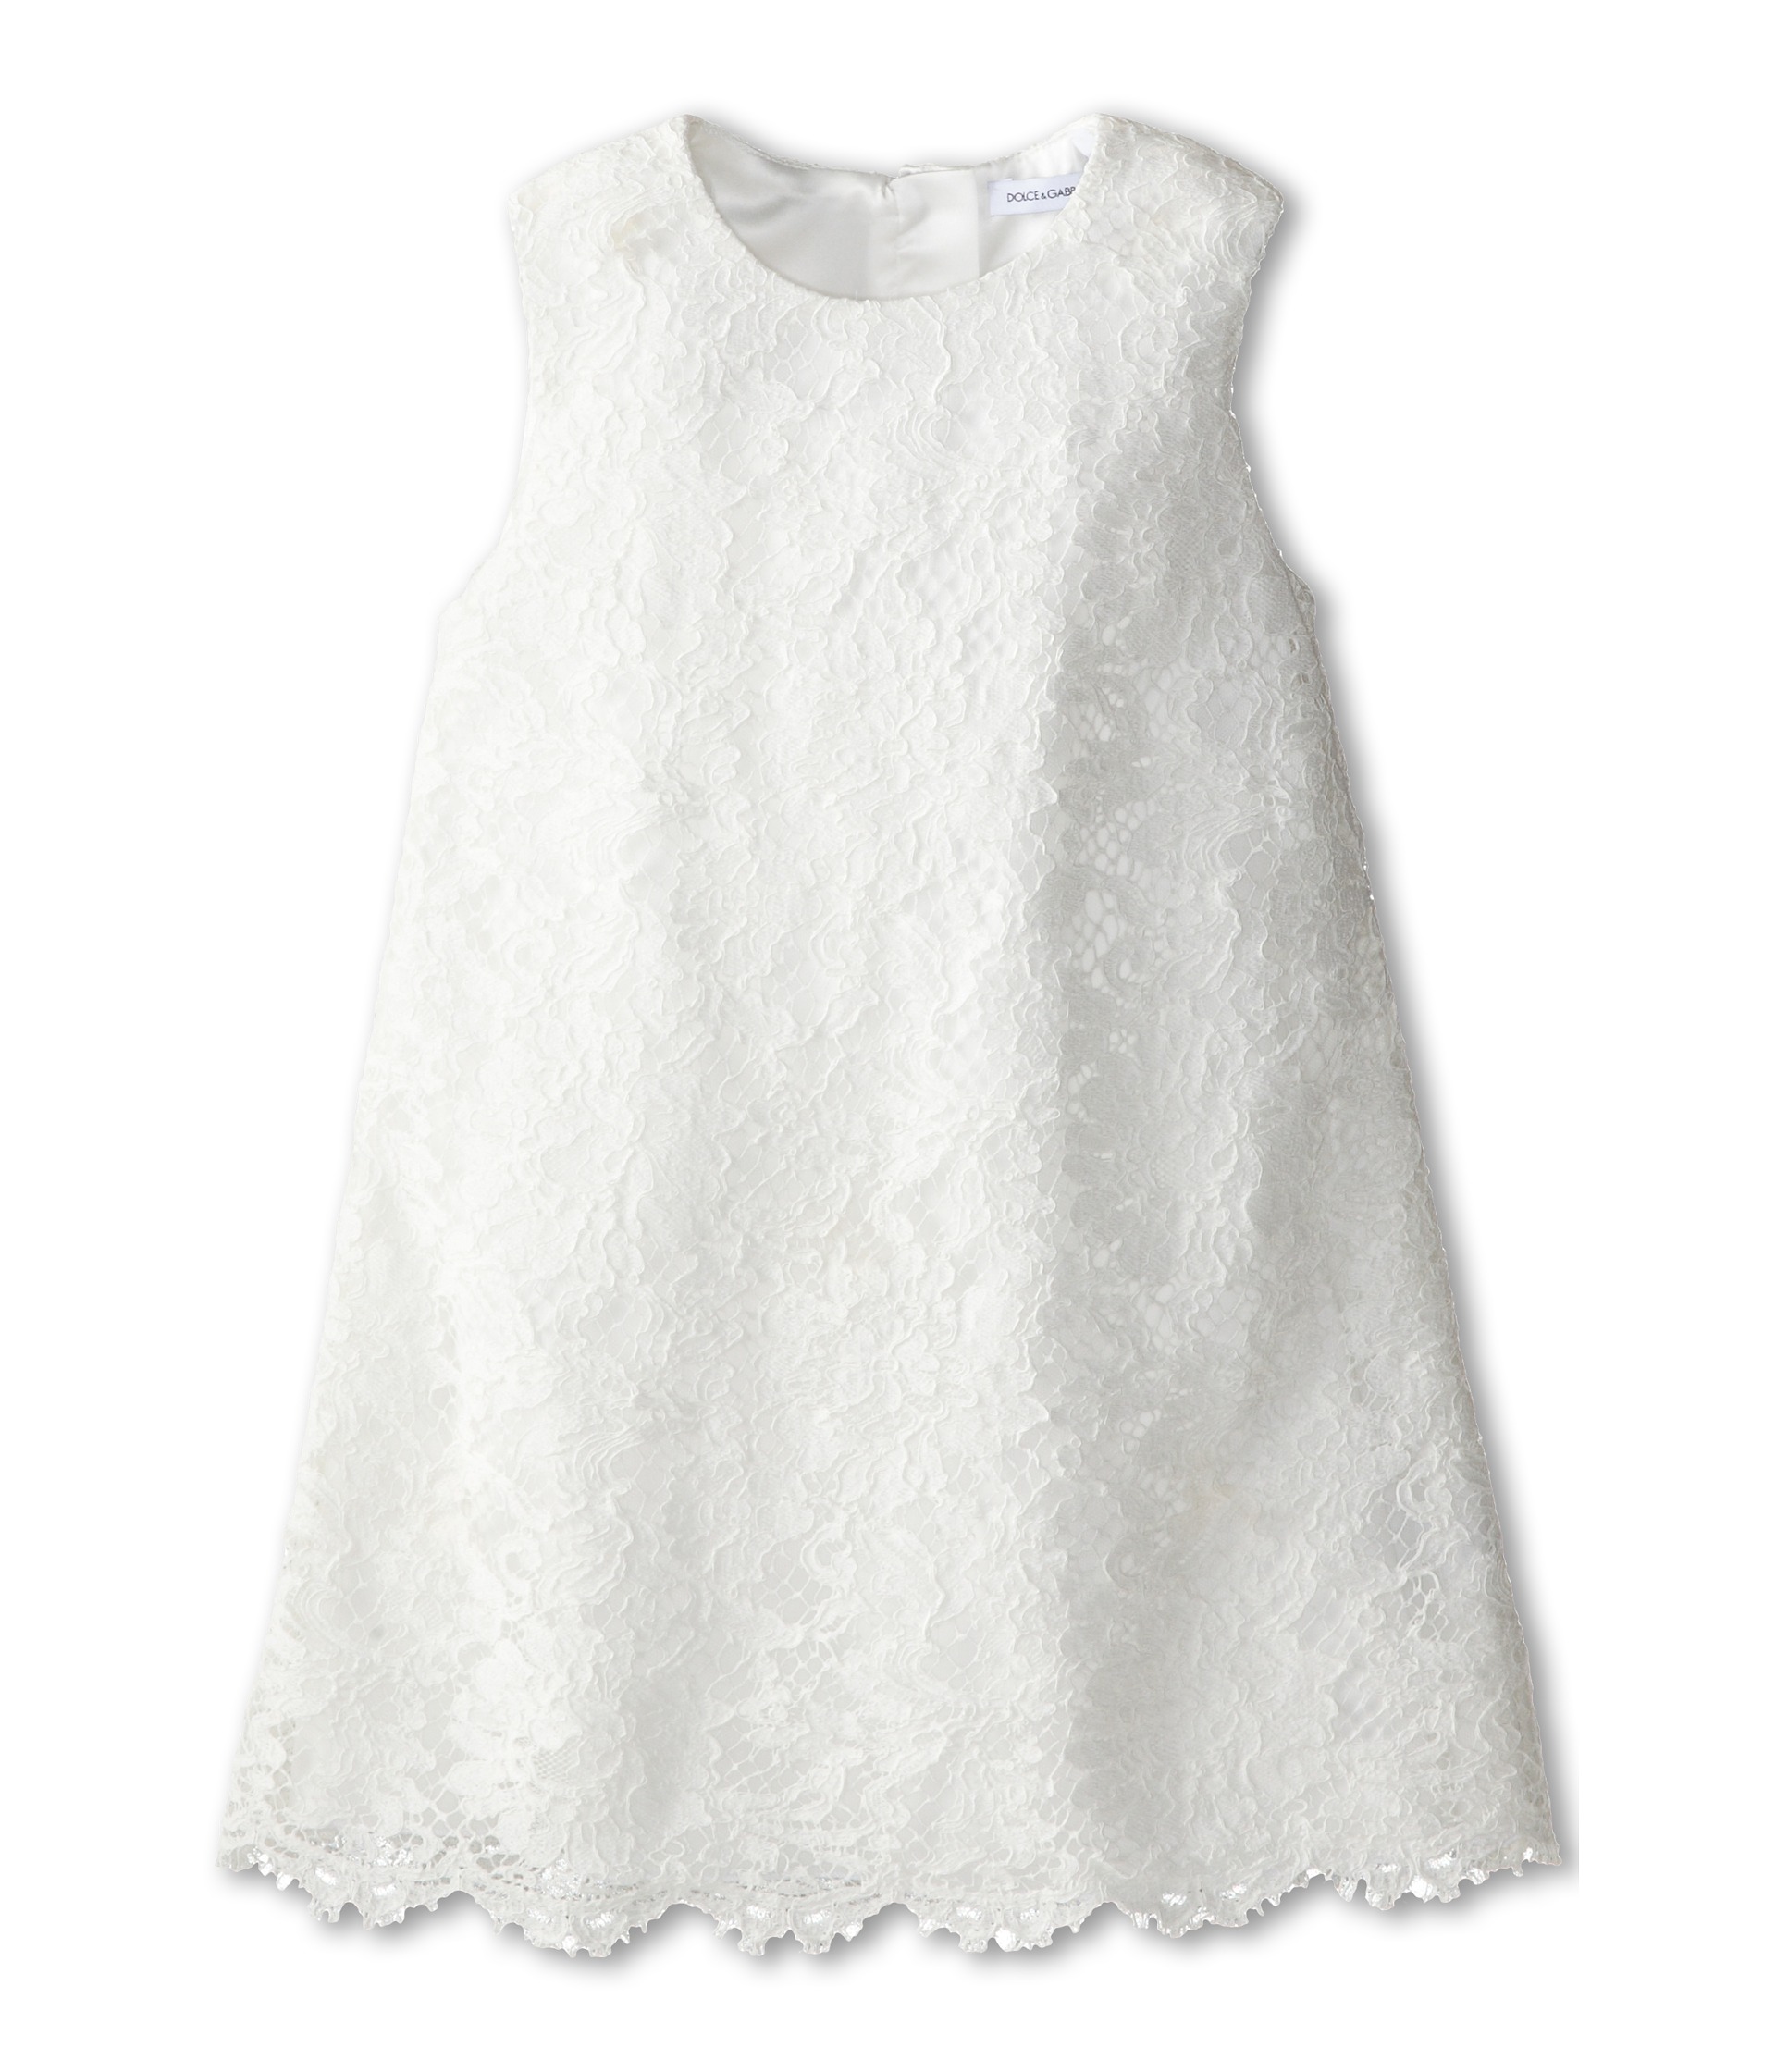 Cotton jersey dress toddler